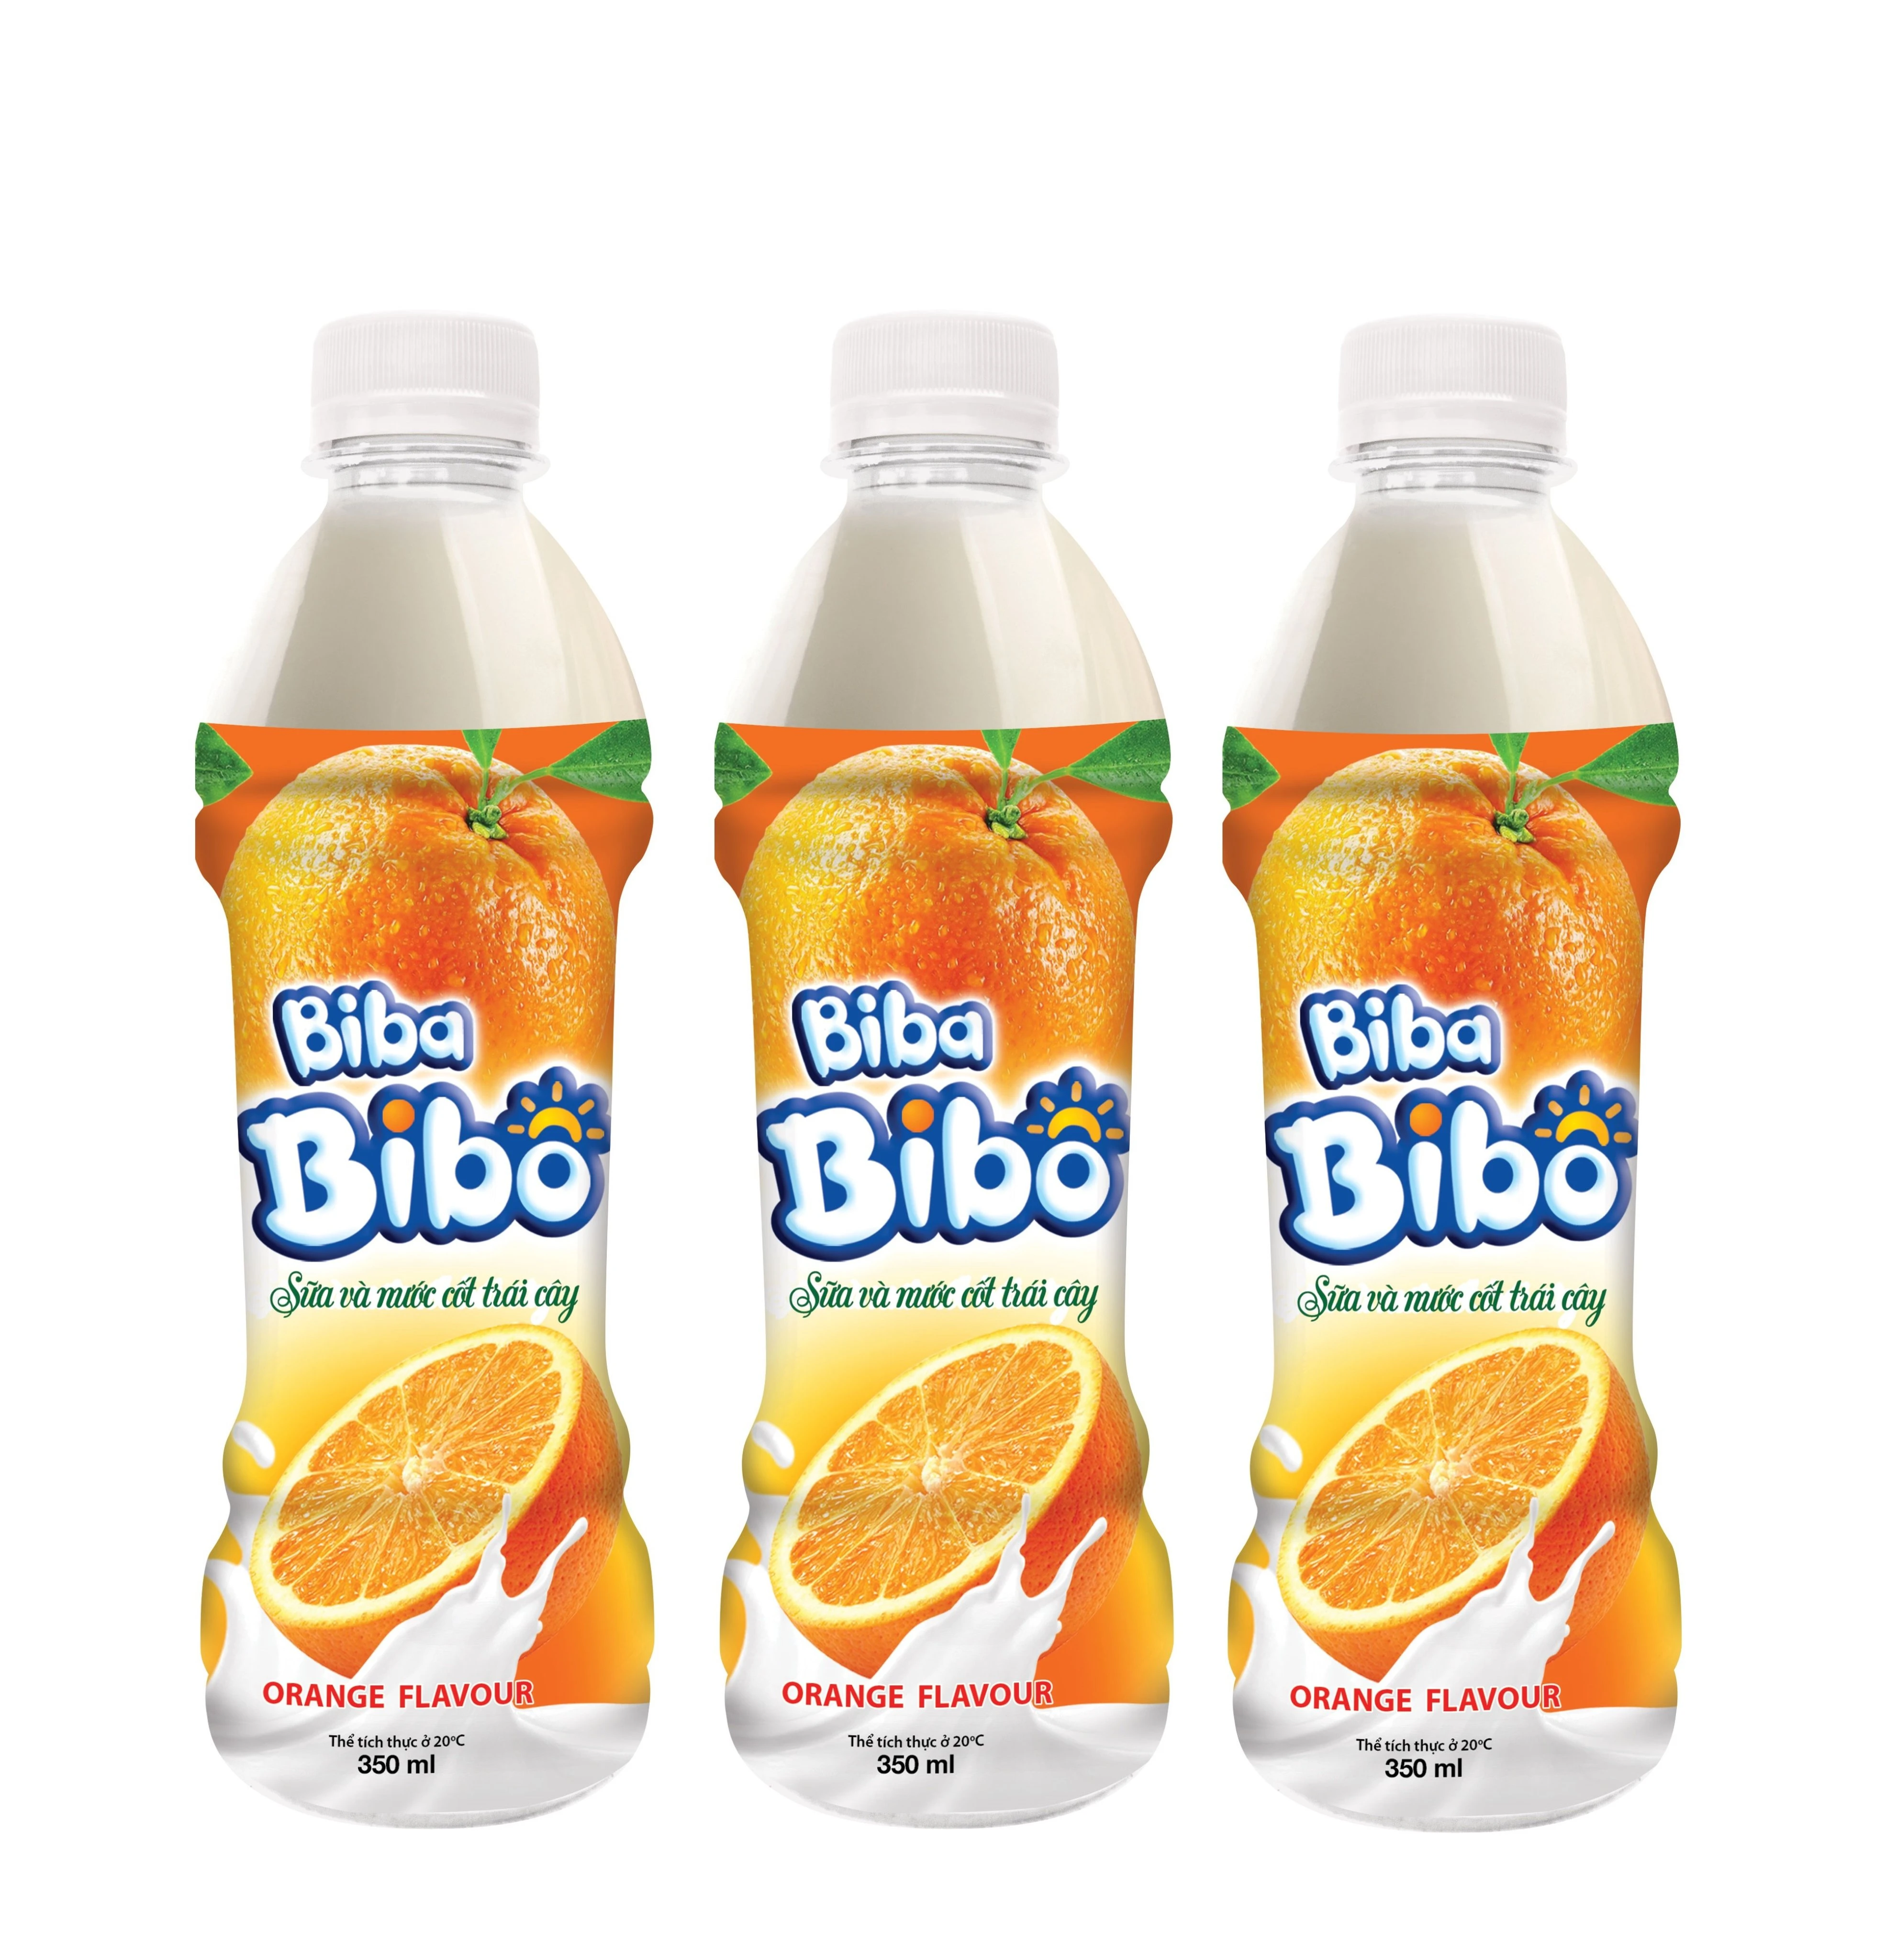 Bibabibo Fruit Flavour Milk - Orange, Passion, Strawberry Milk with Dairy Free, Low Calorie